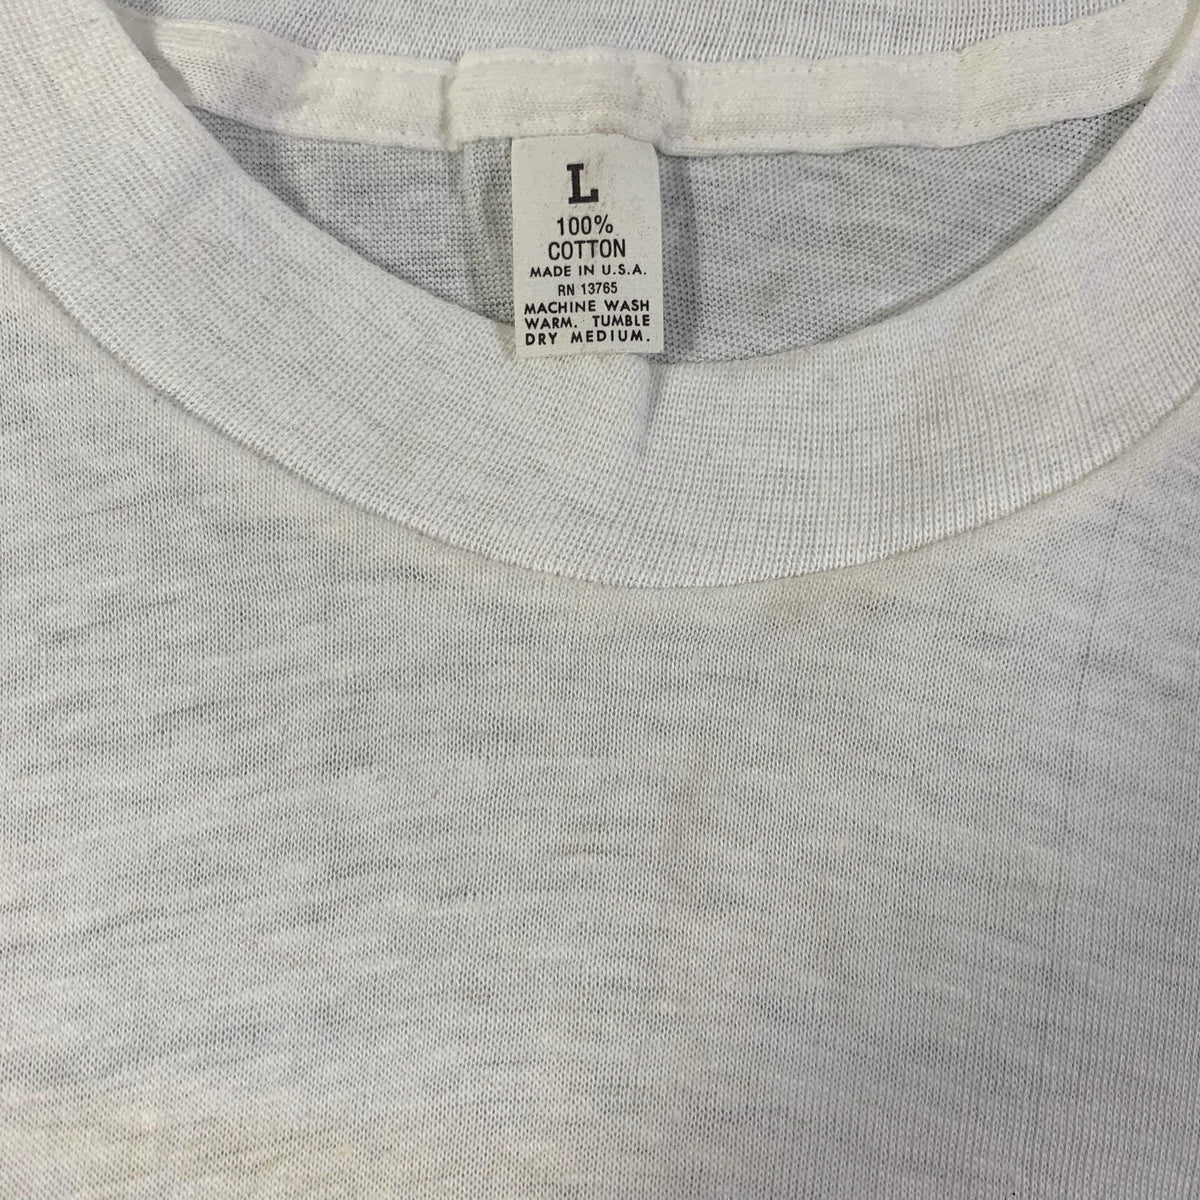 Vintage Original ACDelco Matched Set T shirt Tag detail